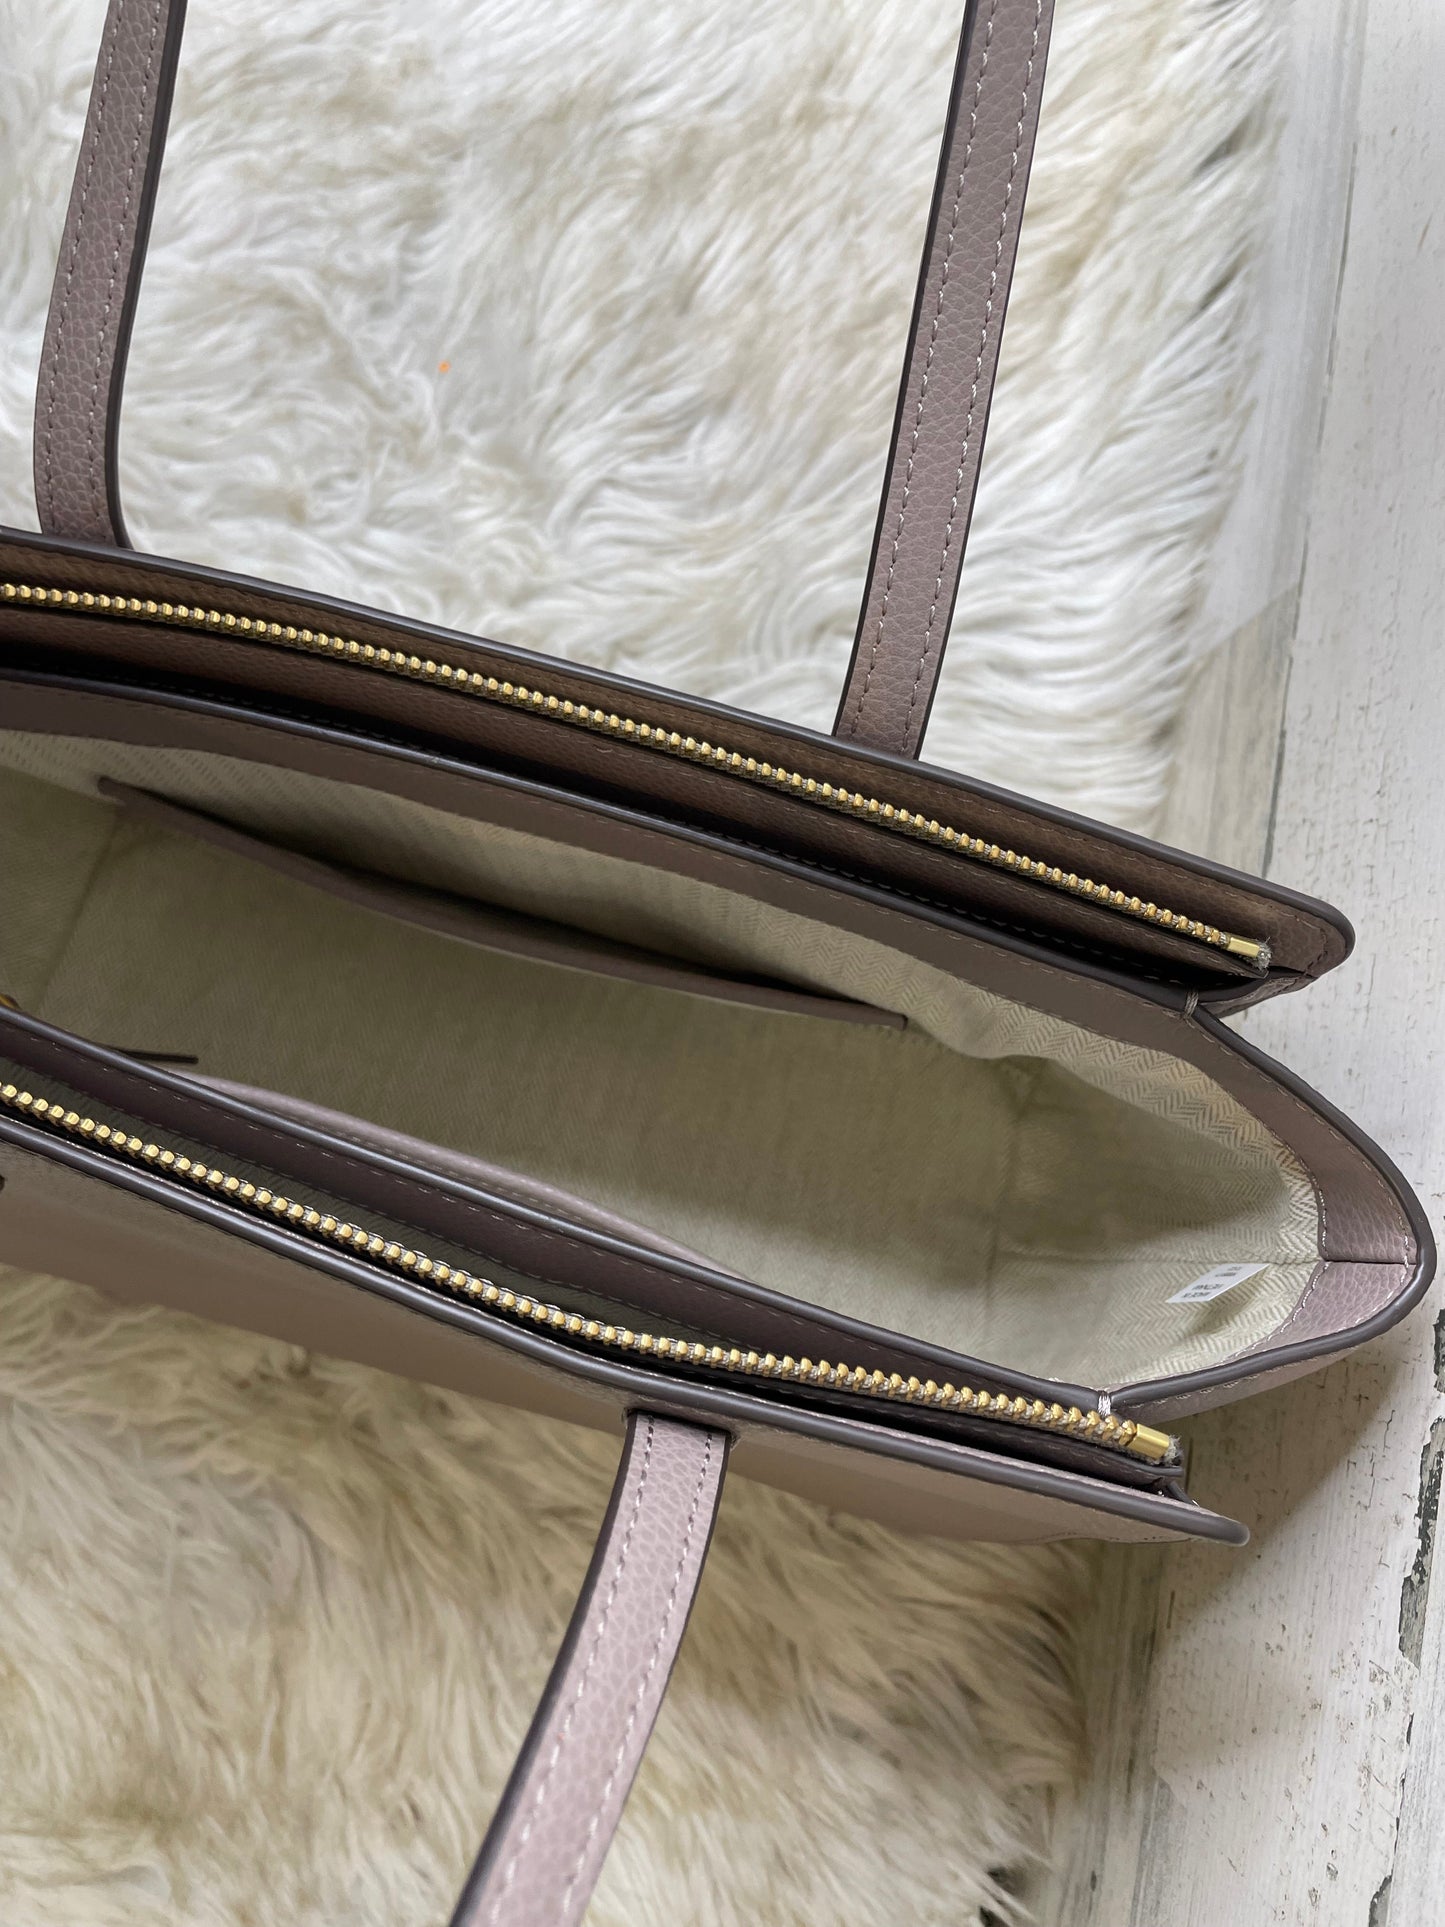 Handbag Luxury Designer By Tory Burch  Size: Medium